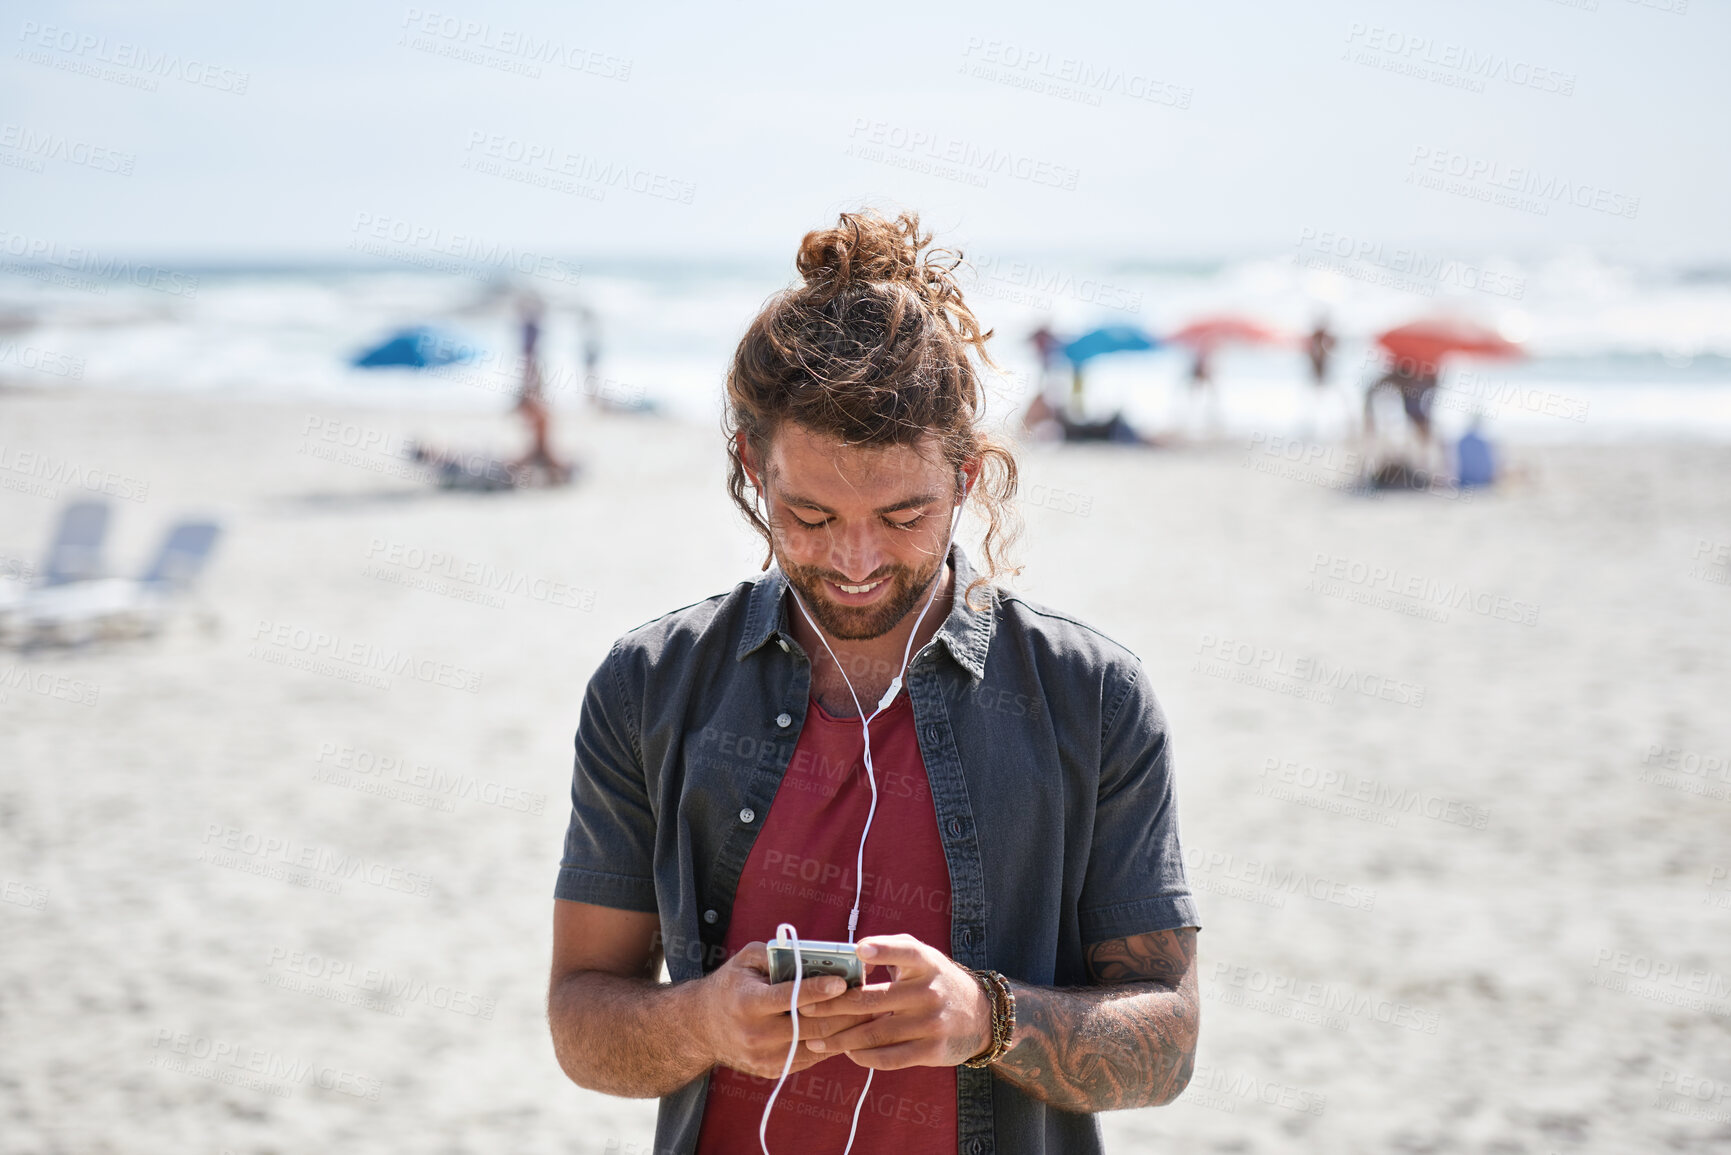 Buy stock photo happy young man using smartphone on beach enjoying sunny day listening to music wearing earphones